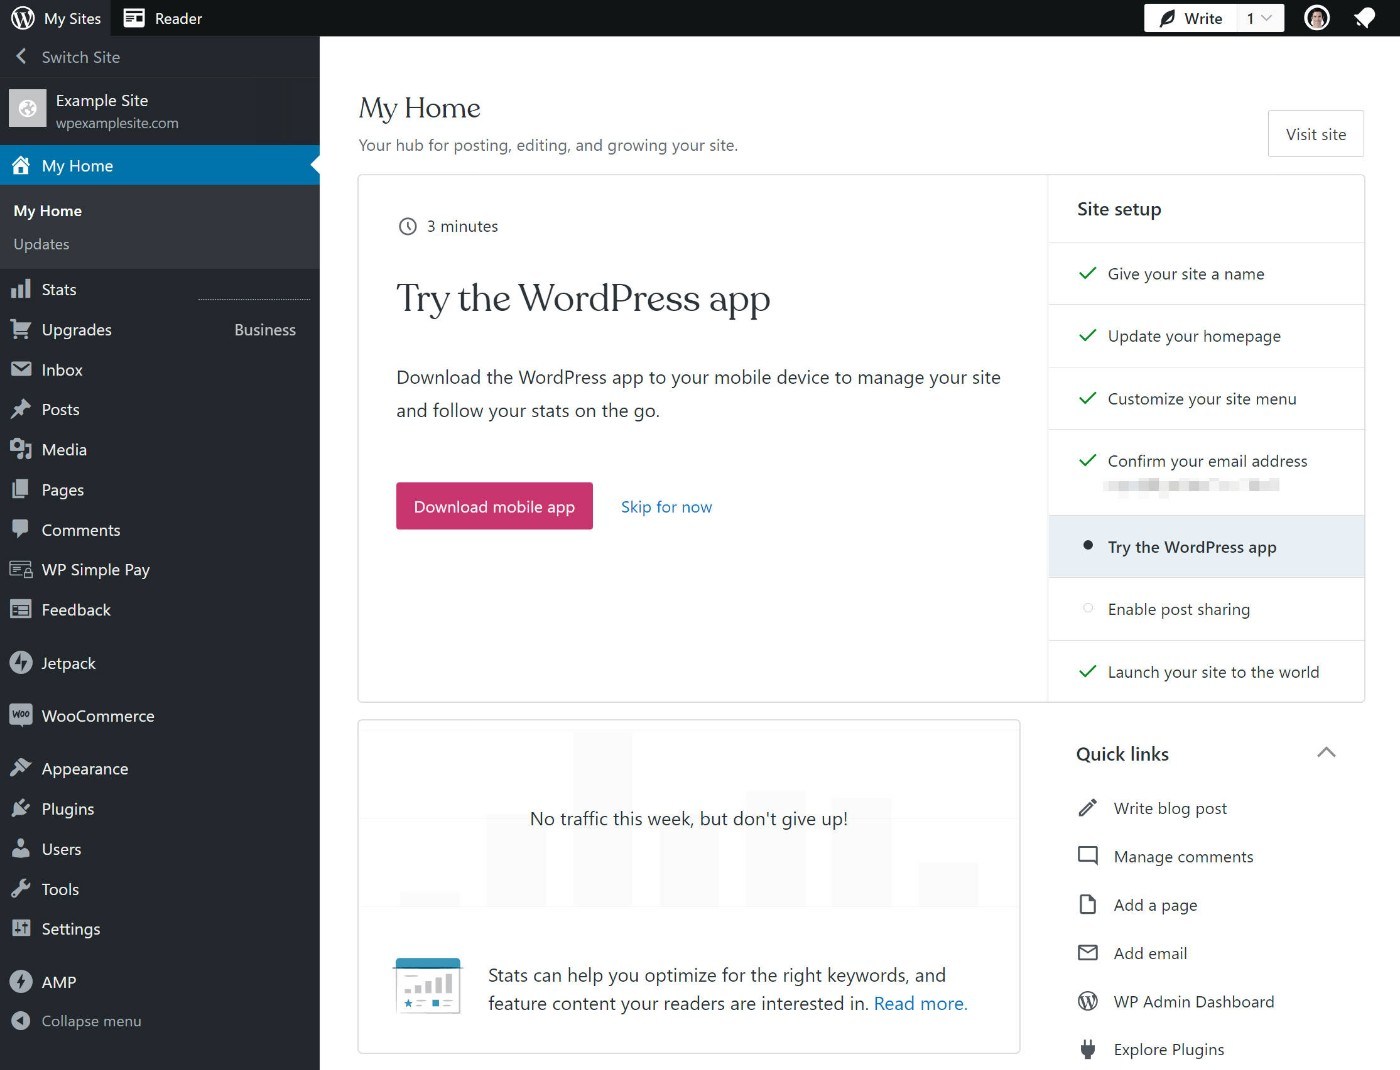 WordPress.com dashboard